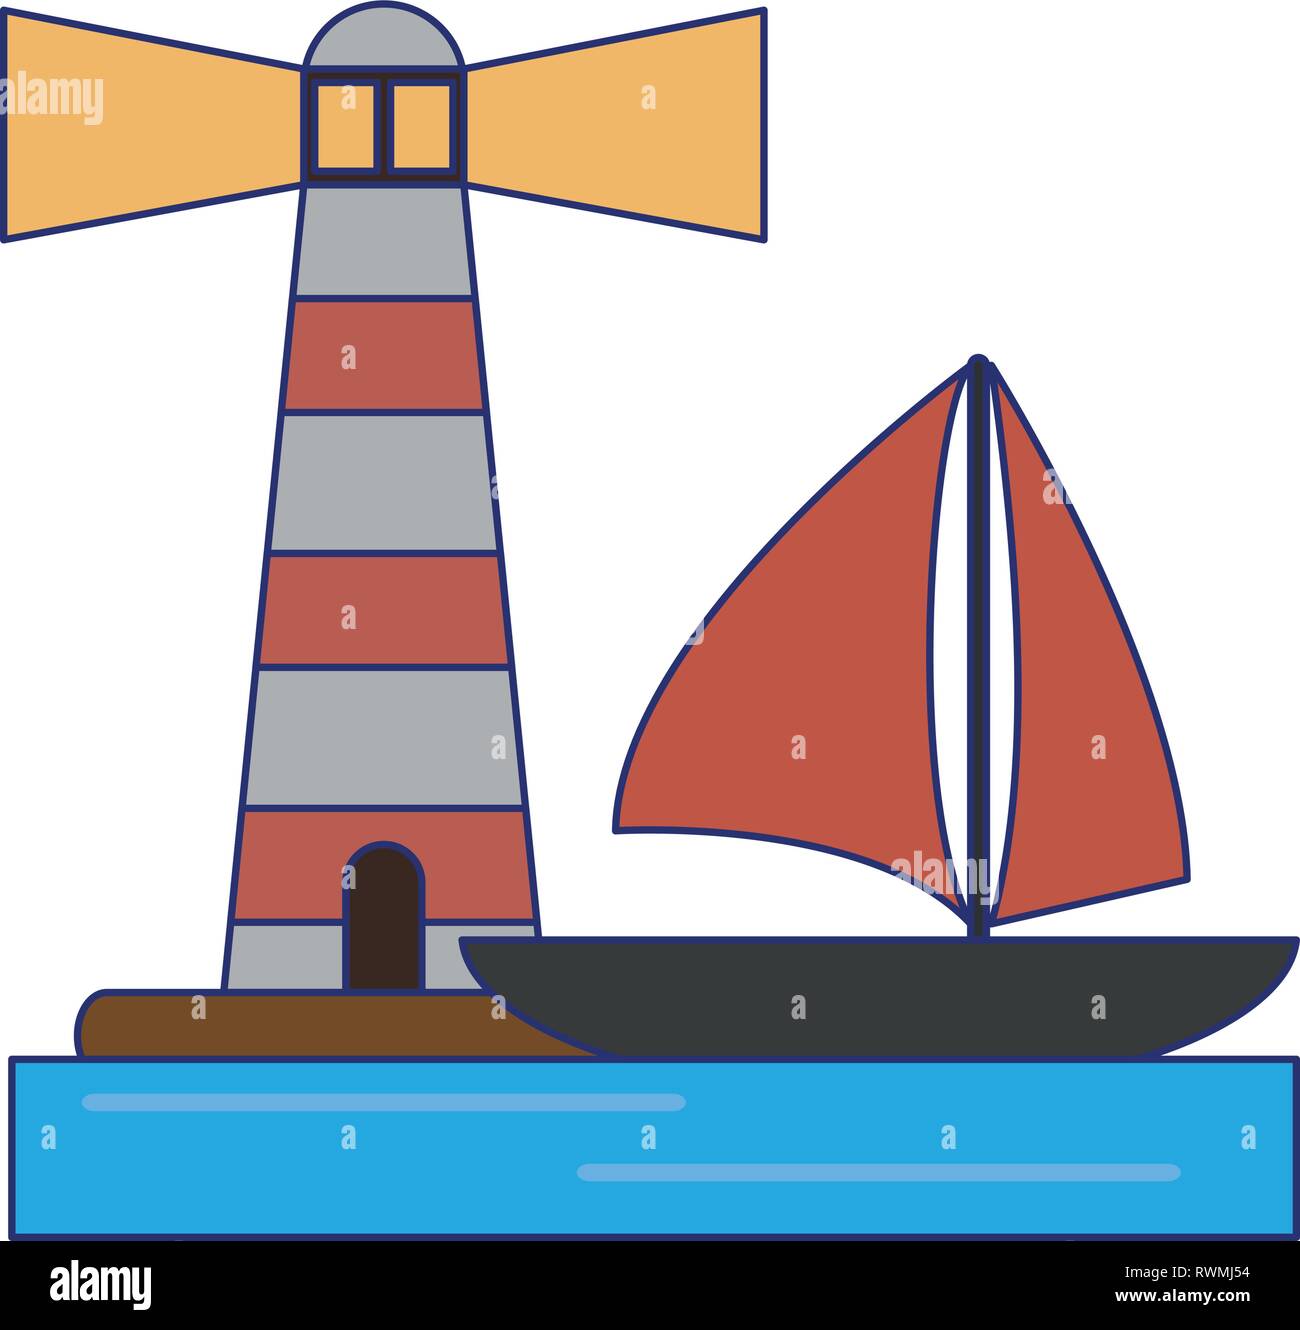 Houselight e barca a vela simbolo illustrazione vettoriale graphic design Illustrazione Vettoriale